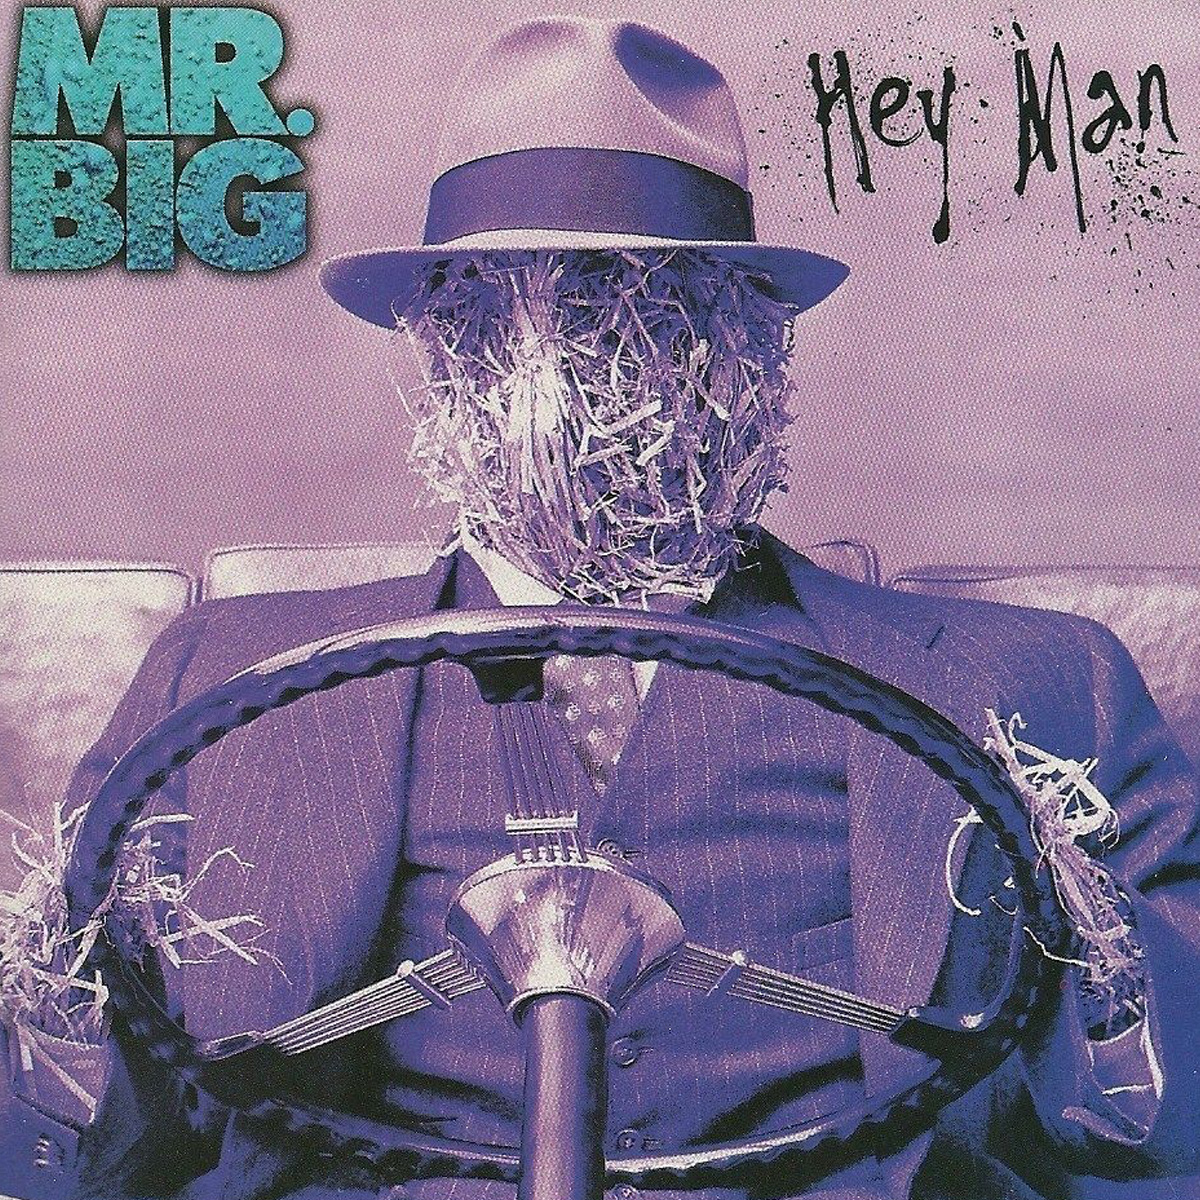 Mr. Big: Hey Man